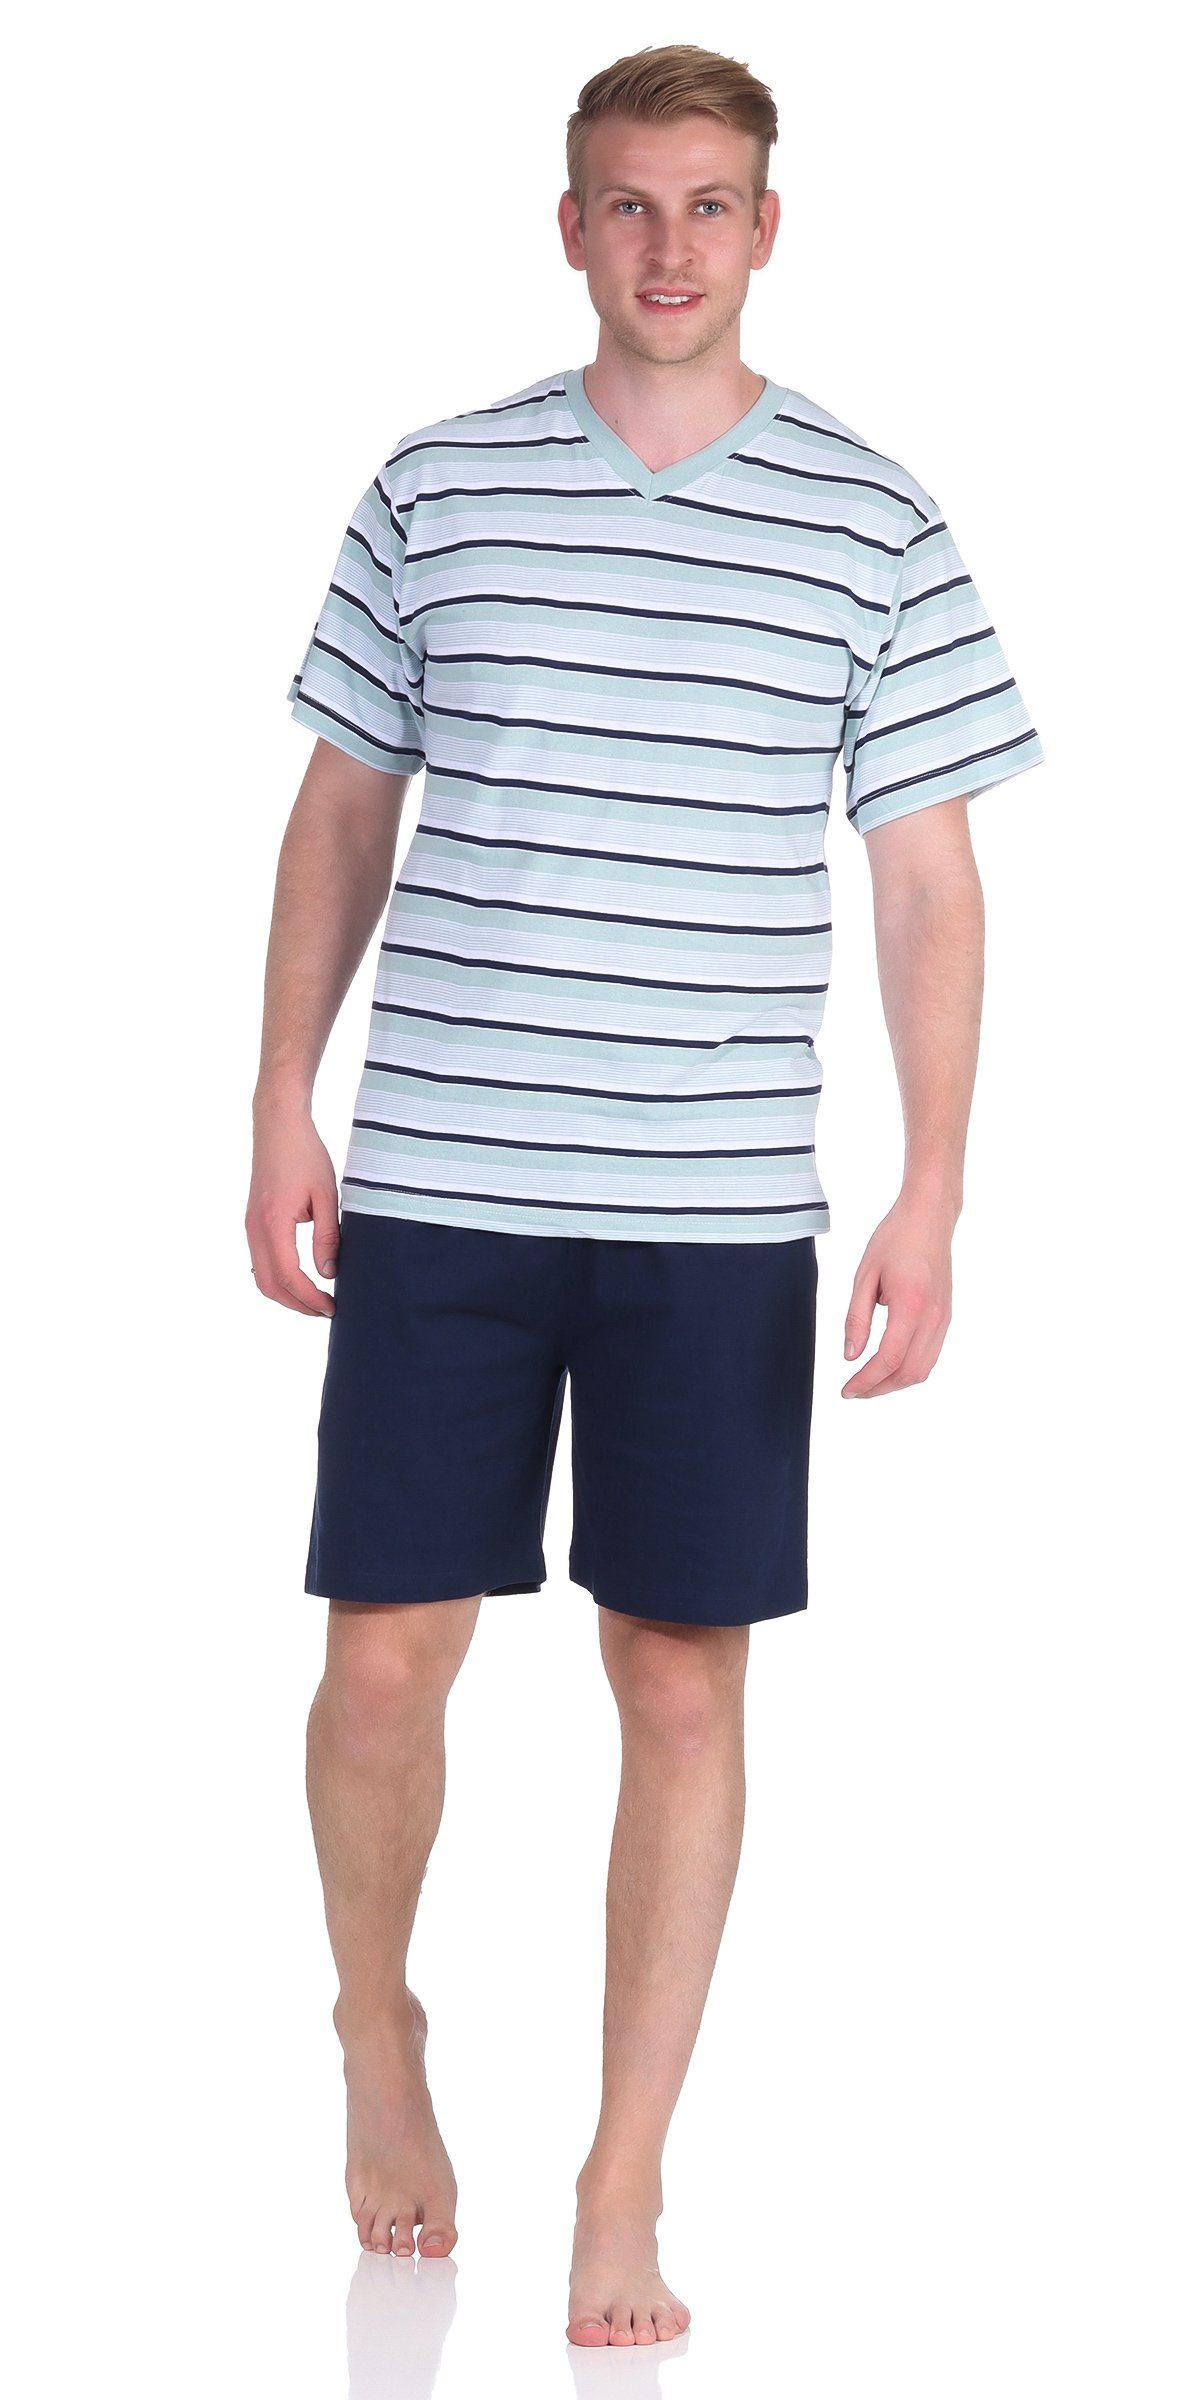 Moonline Shorty Herren Schlafanzug V-Ausschnitt Single-Jersey Shorty Aqua mit Baumwolle 100% Kurzarm